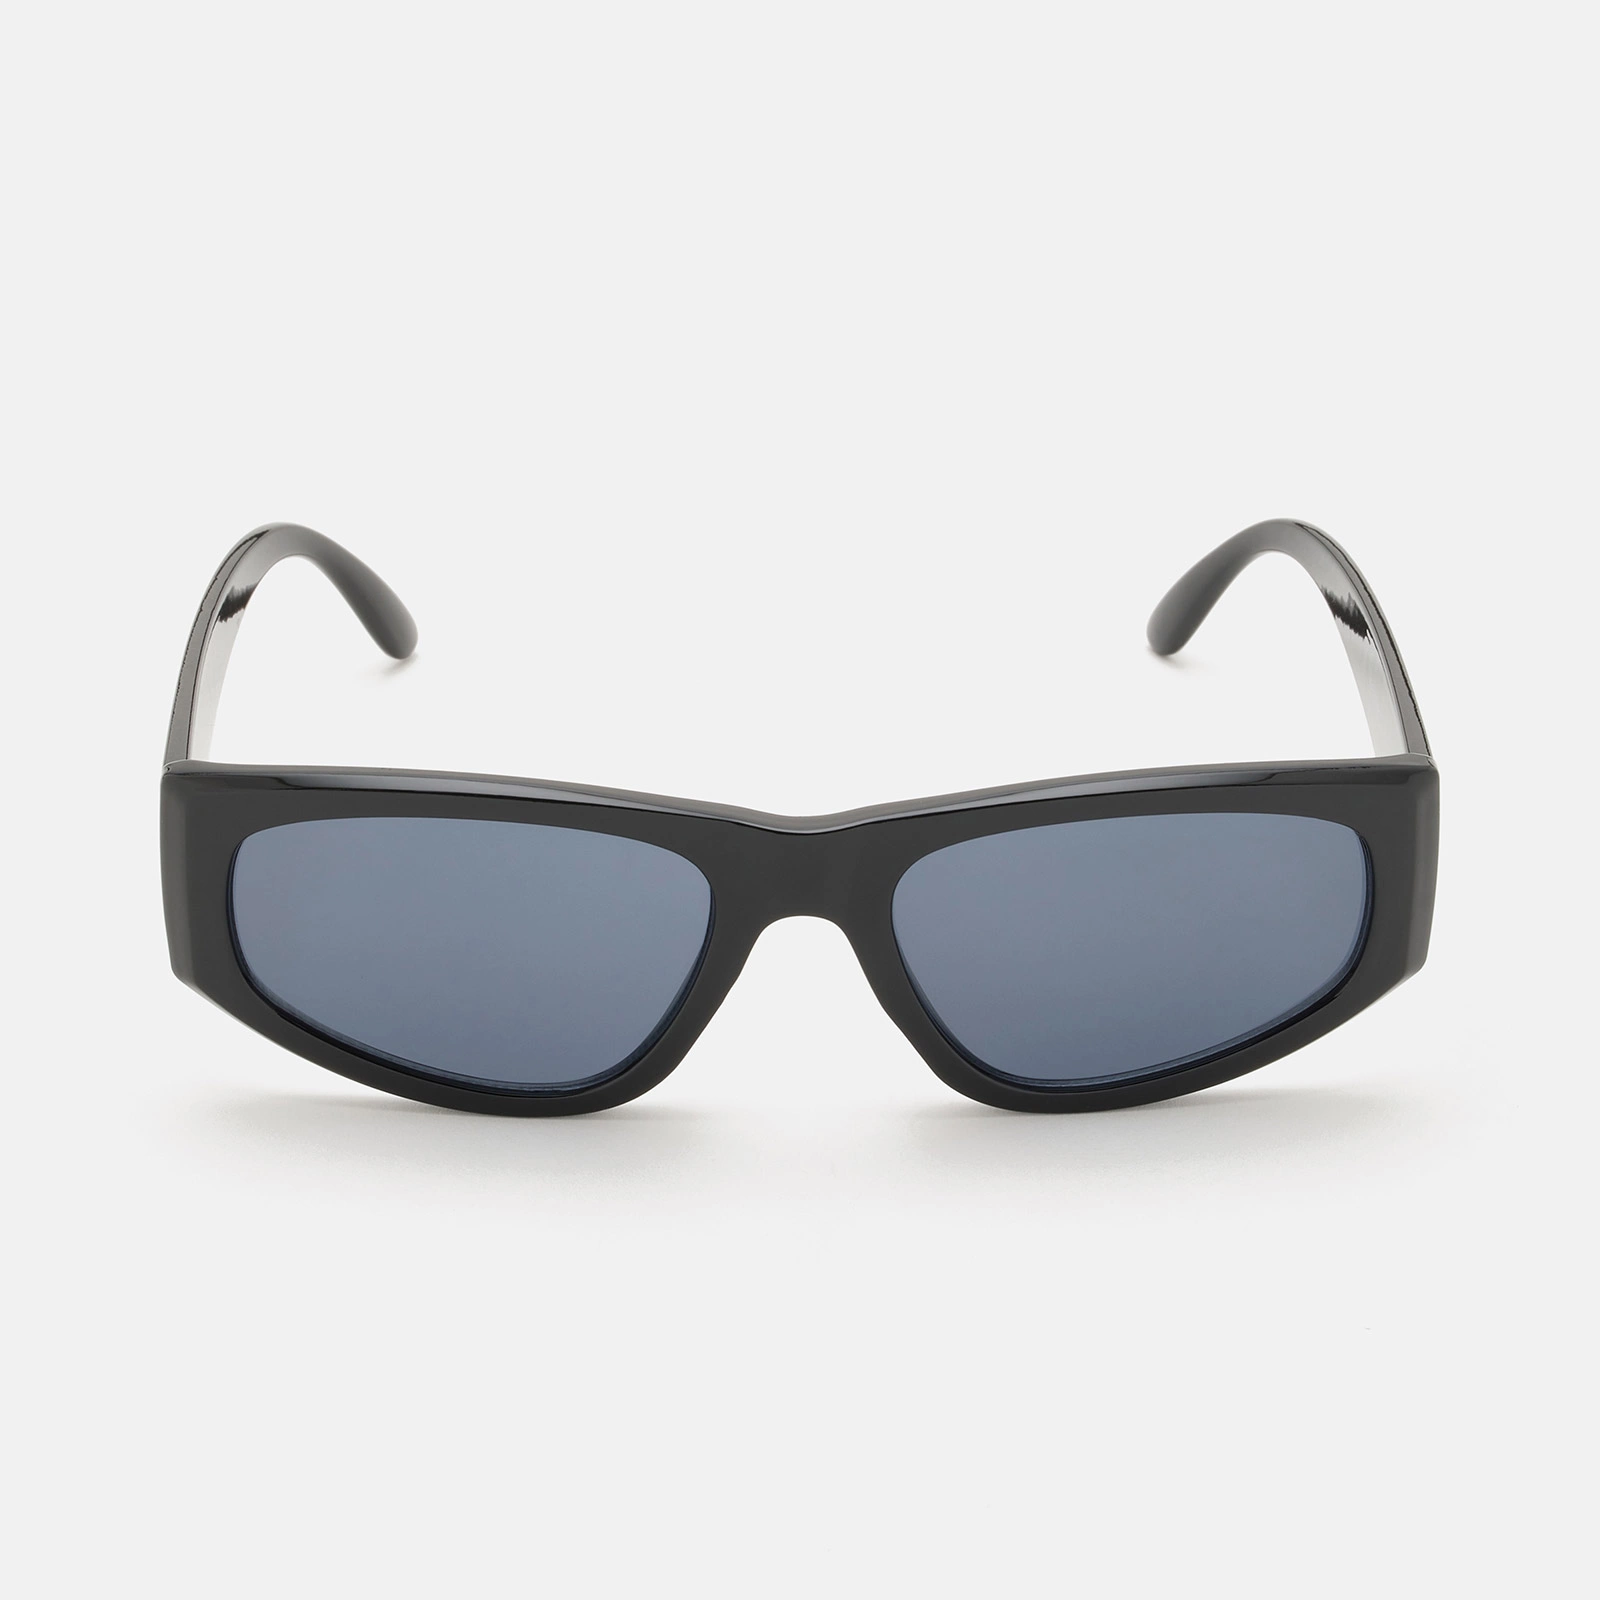 Svarta solglasögon - smal retromodell